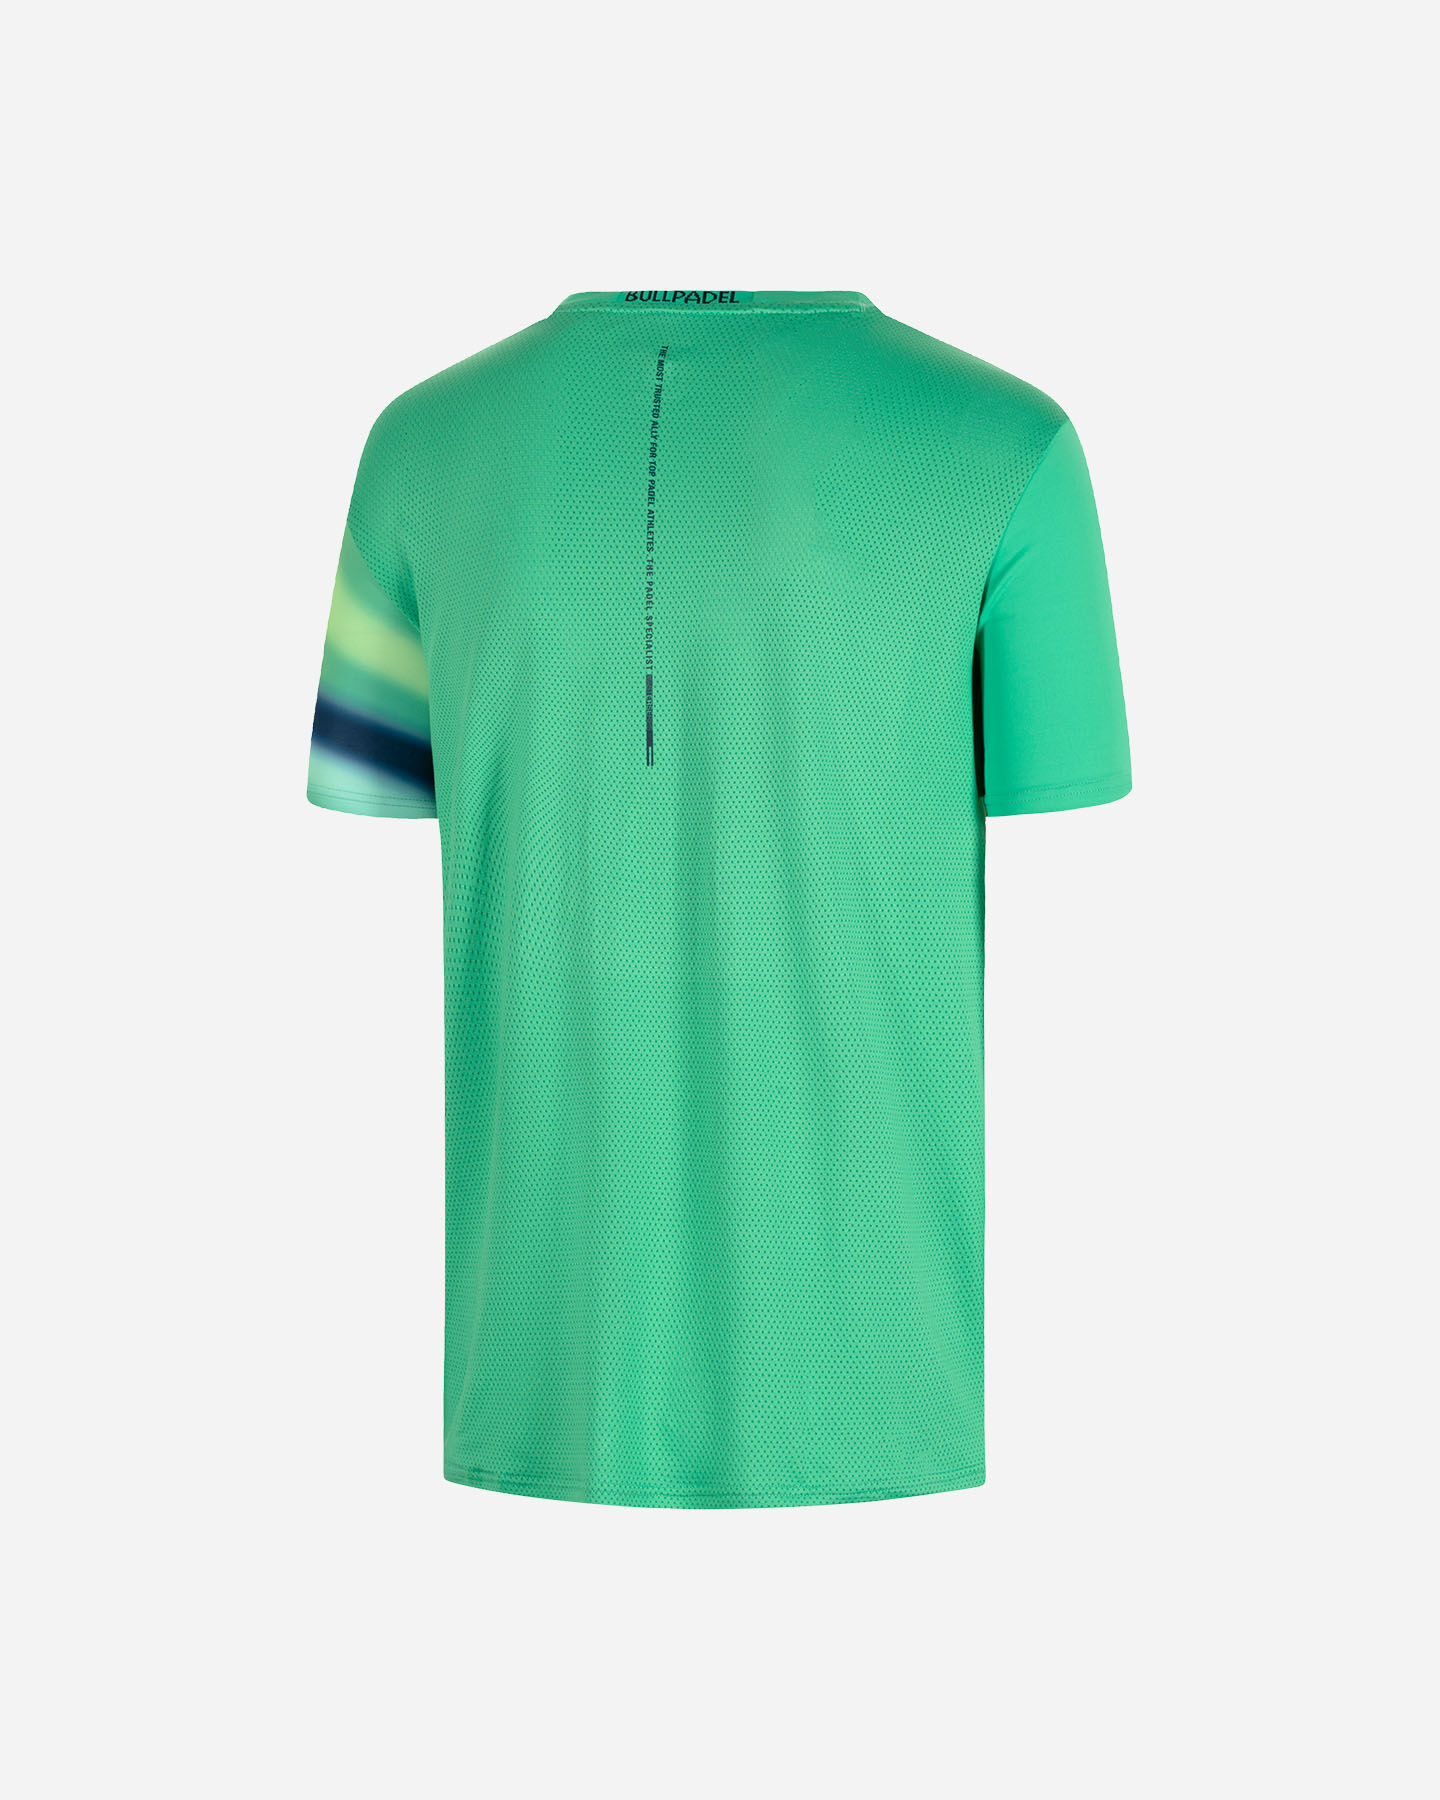  T-Shirt tennis BULLPADEL MISMO M S4131950|407|S scatto 1